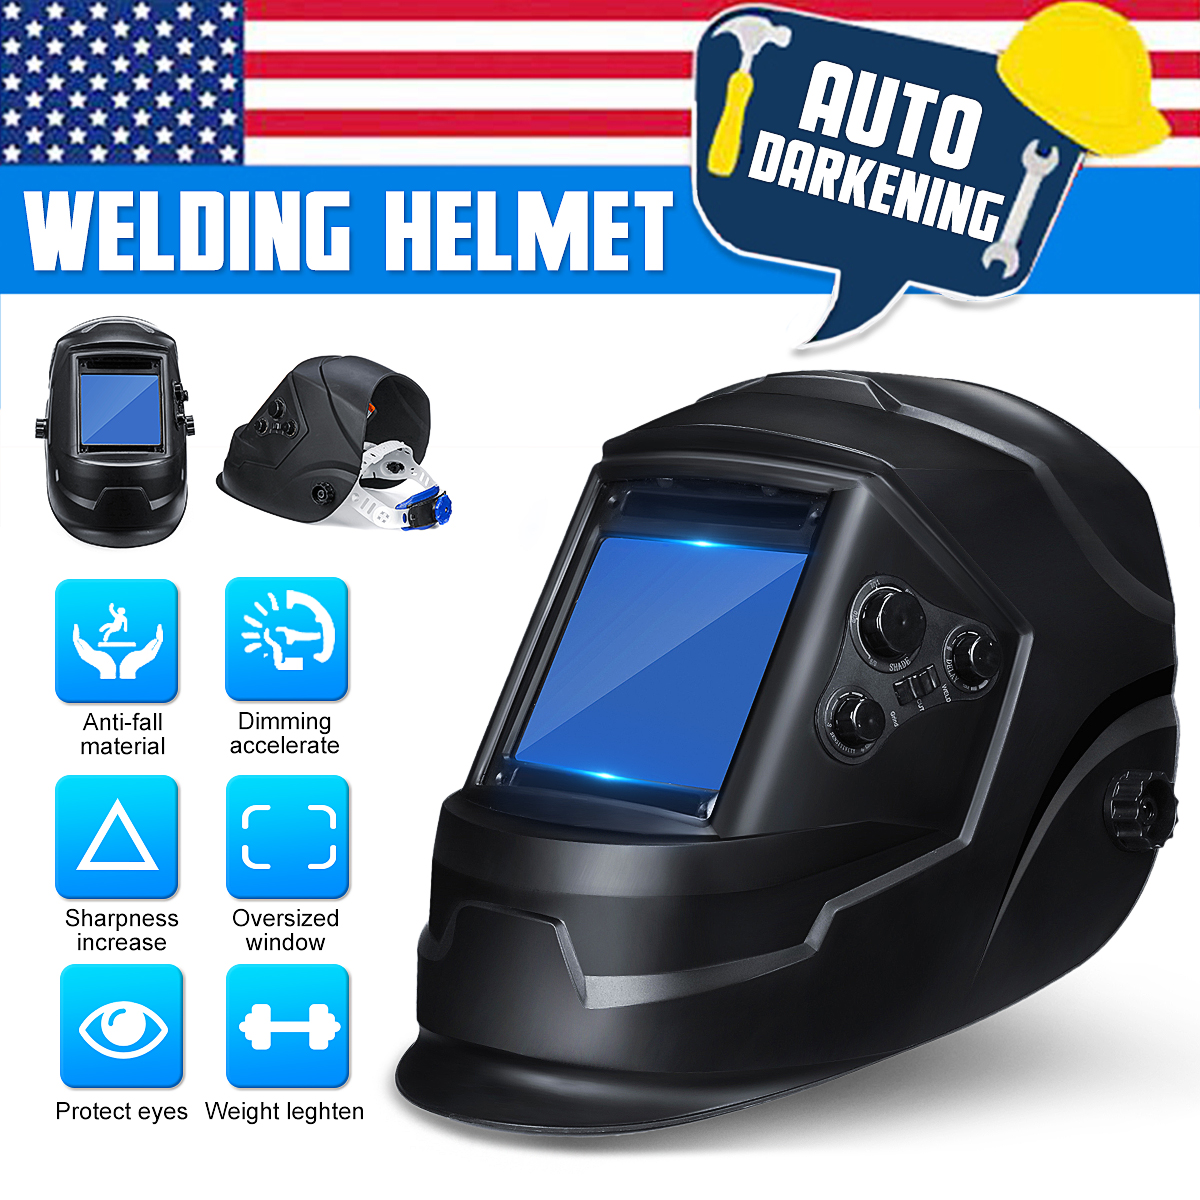 Solar-Energy-Automatic-Dimming-Welding-Mask-Auto-Darkening-Welding-Helmet-Big-View-Area-4-Sensors-Ex-1534647-7